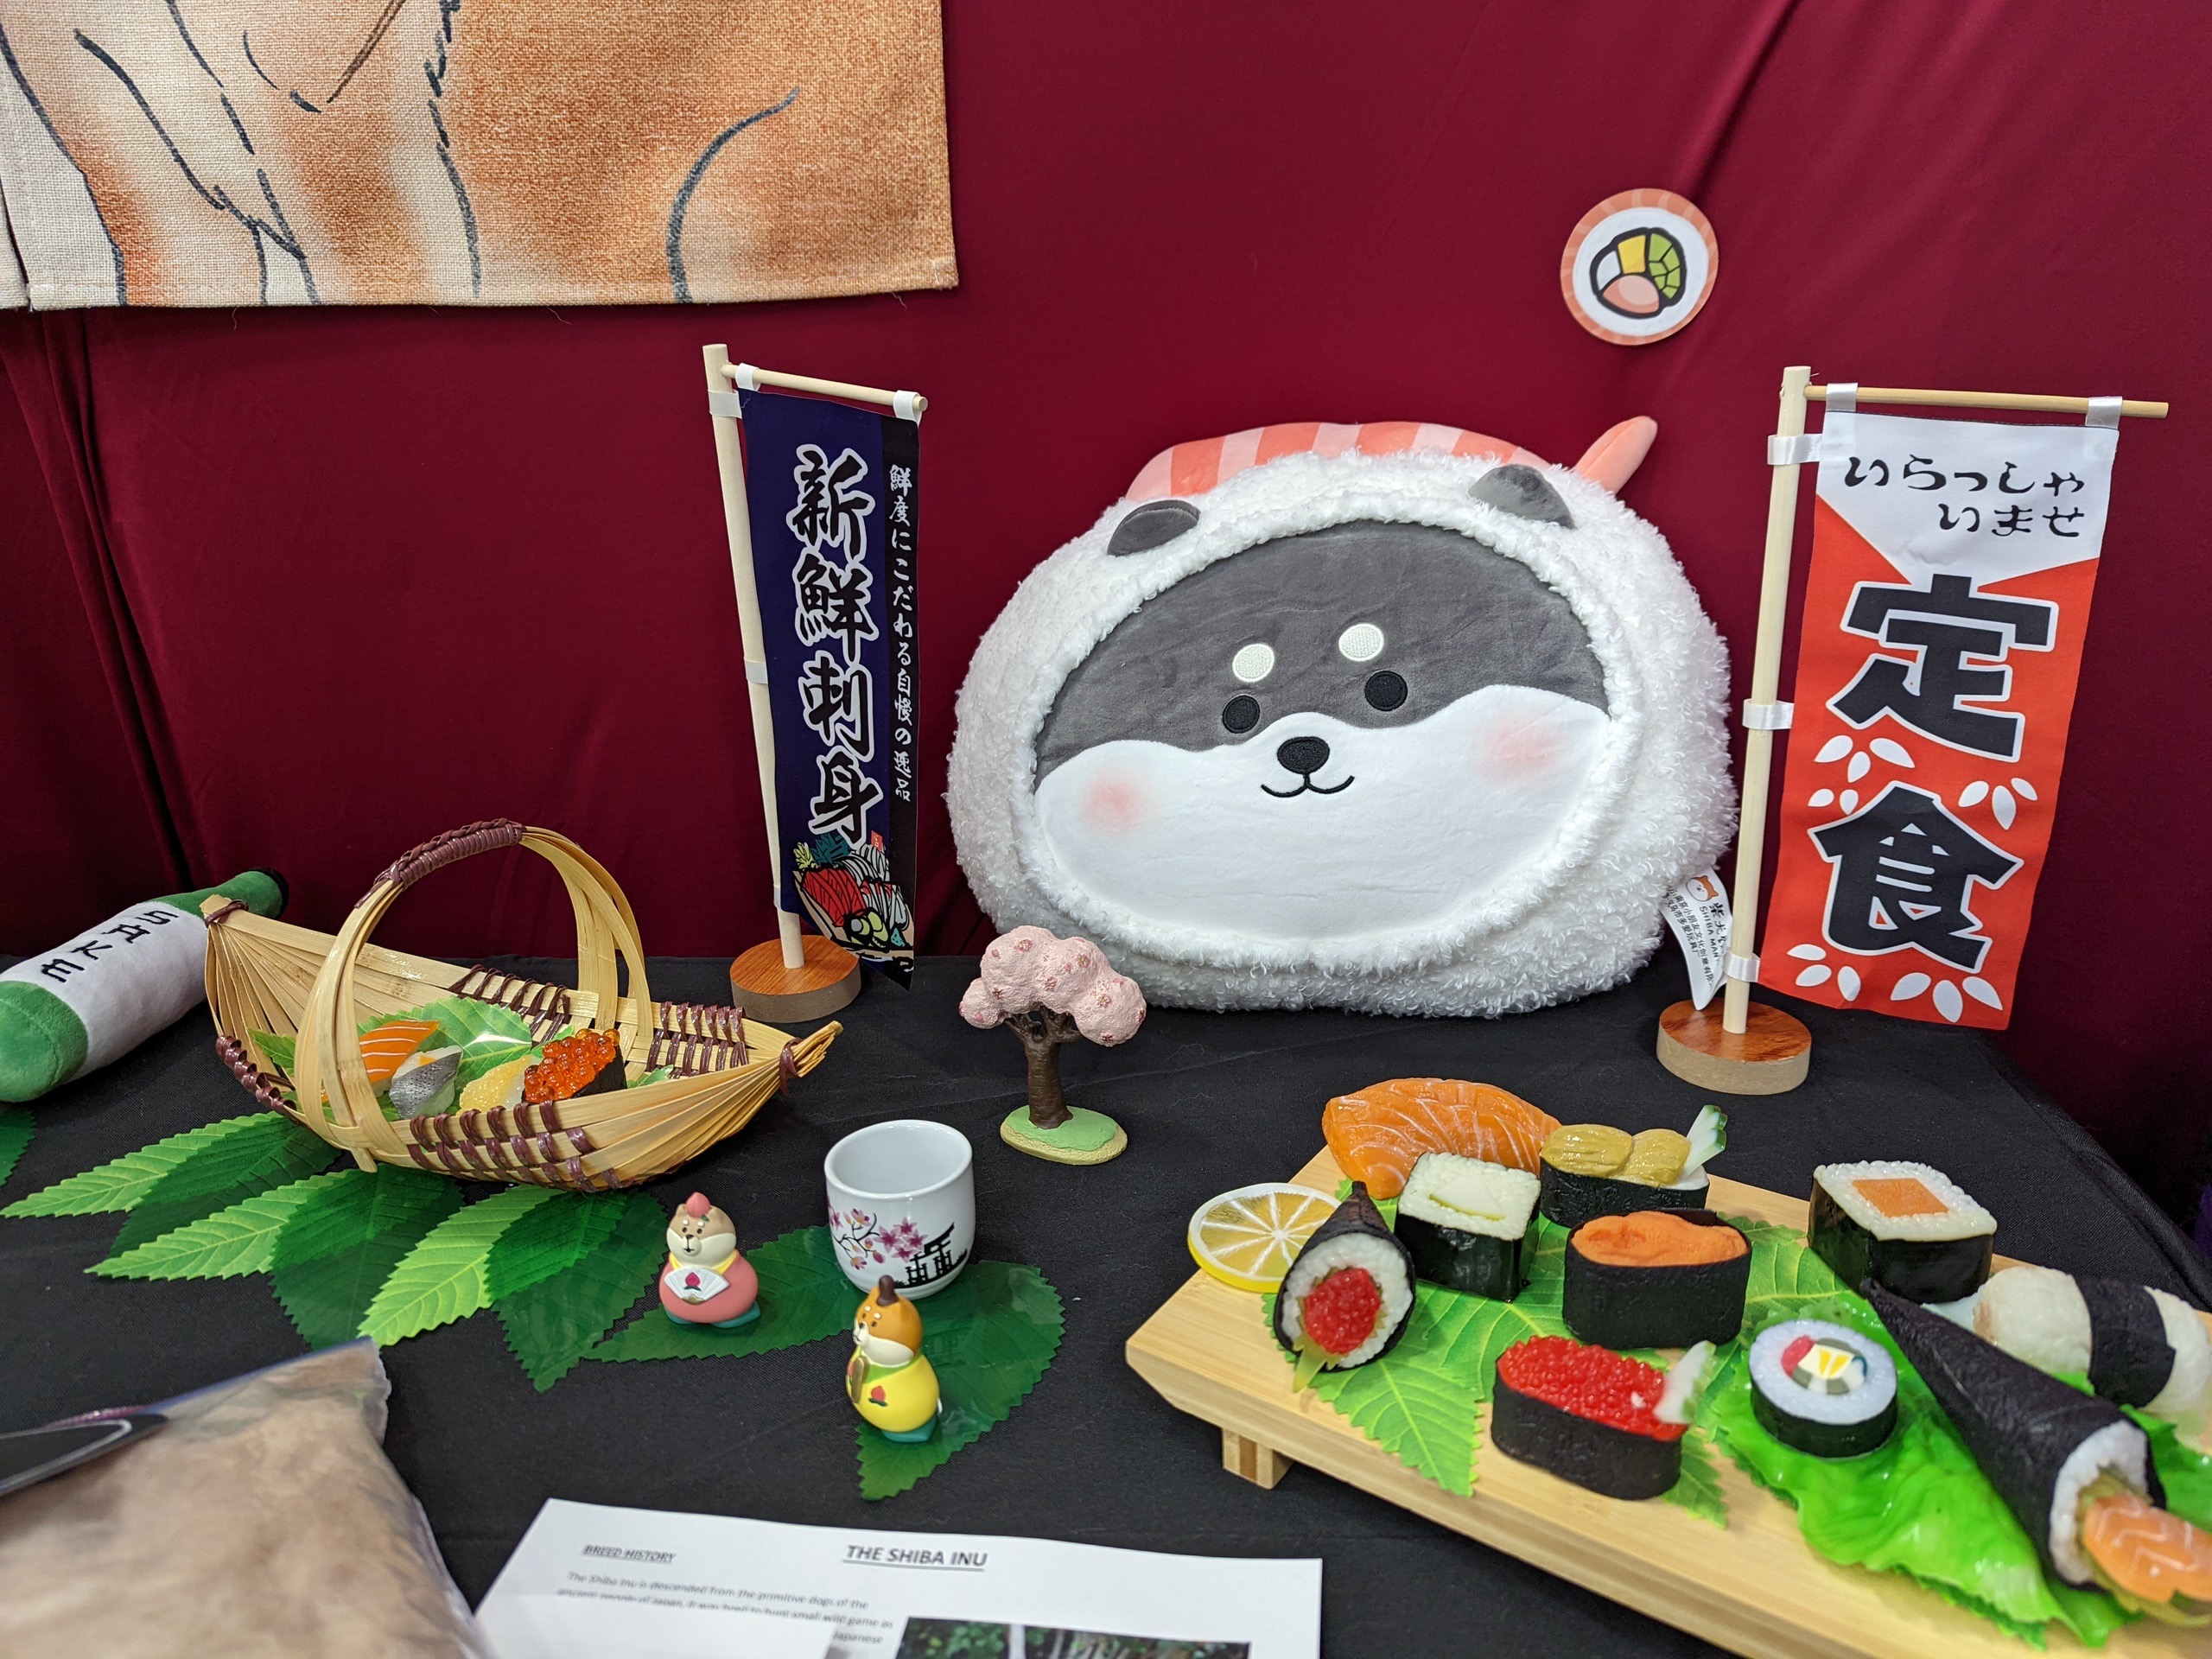 Sushi items and nigiri Shiba plushie